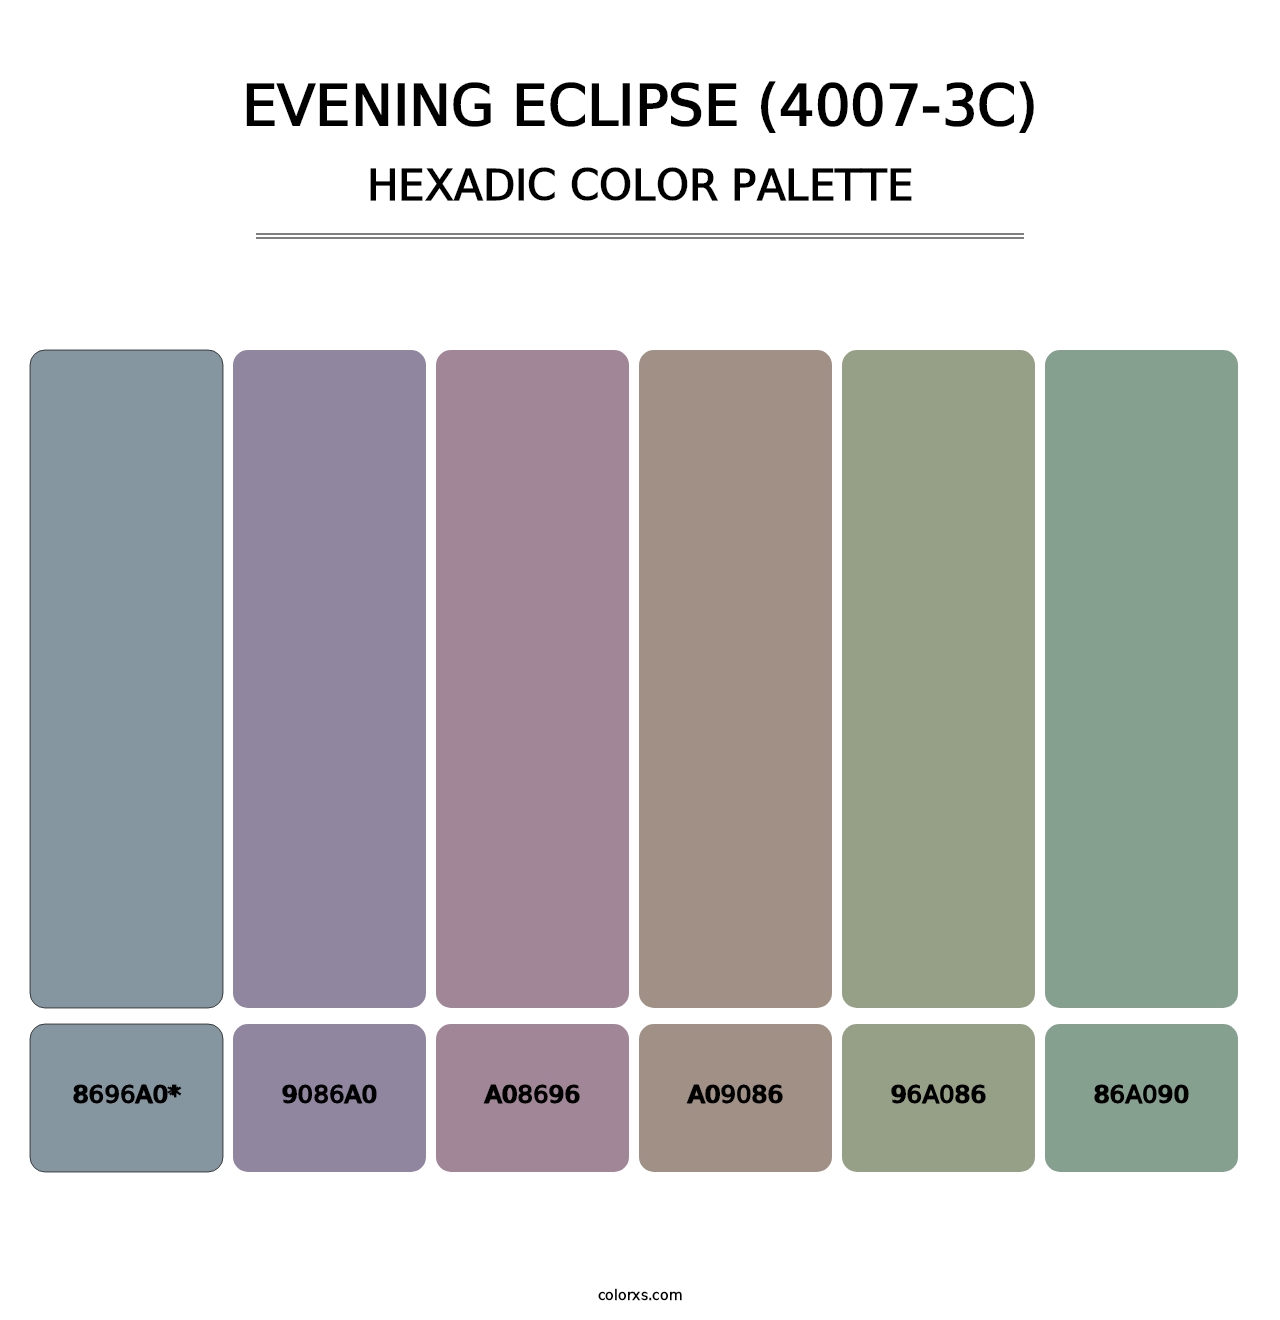 Evening Eclipse (4007-3C) - Hexadic Color Palette